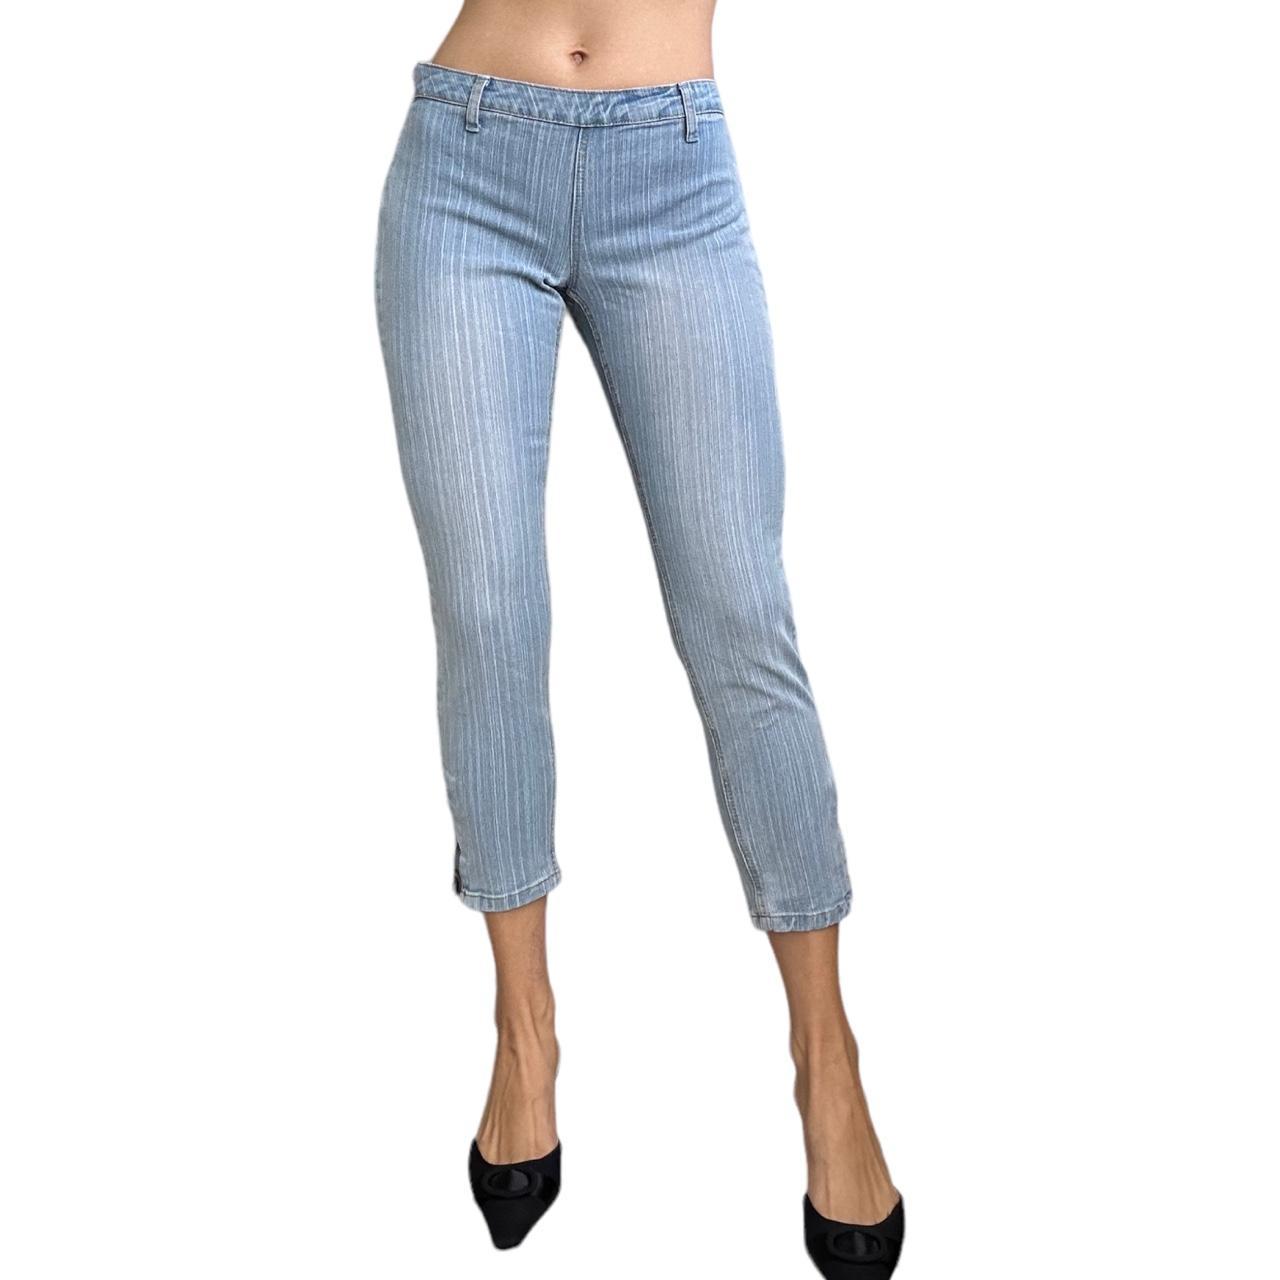 Y2k capri jeans low rise pinstripe with zippers on... - Depop